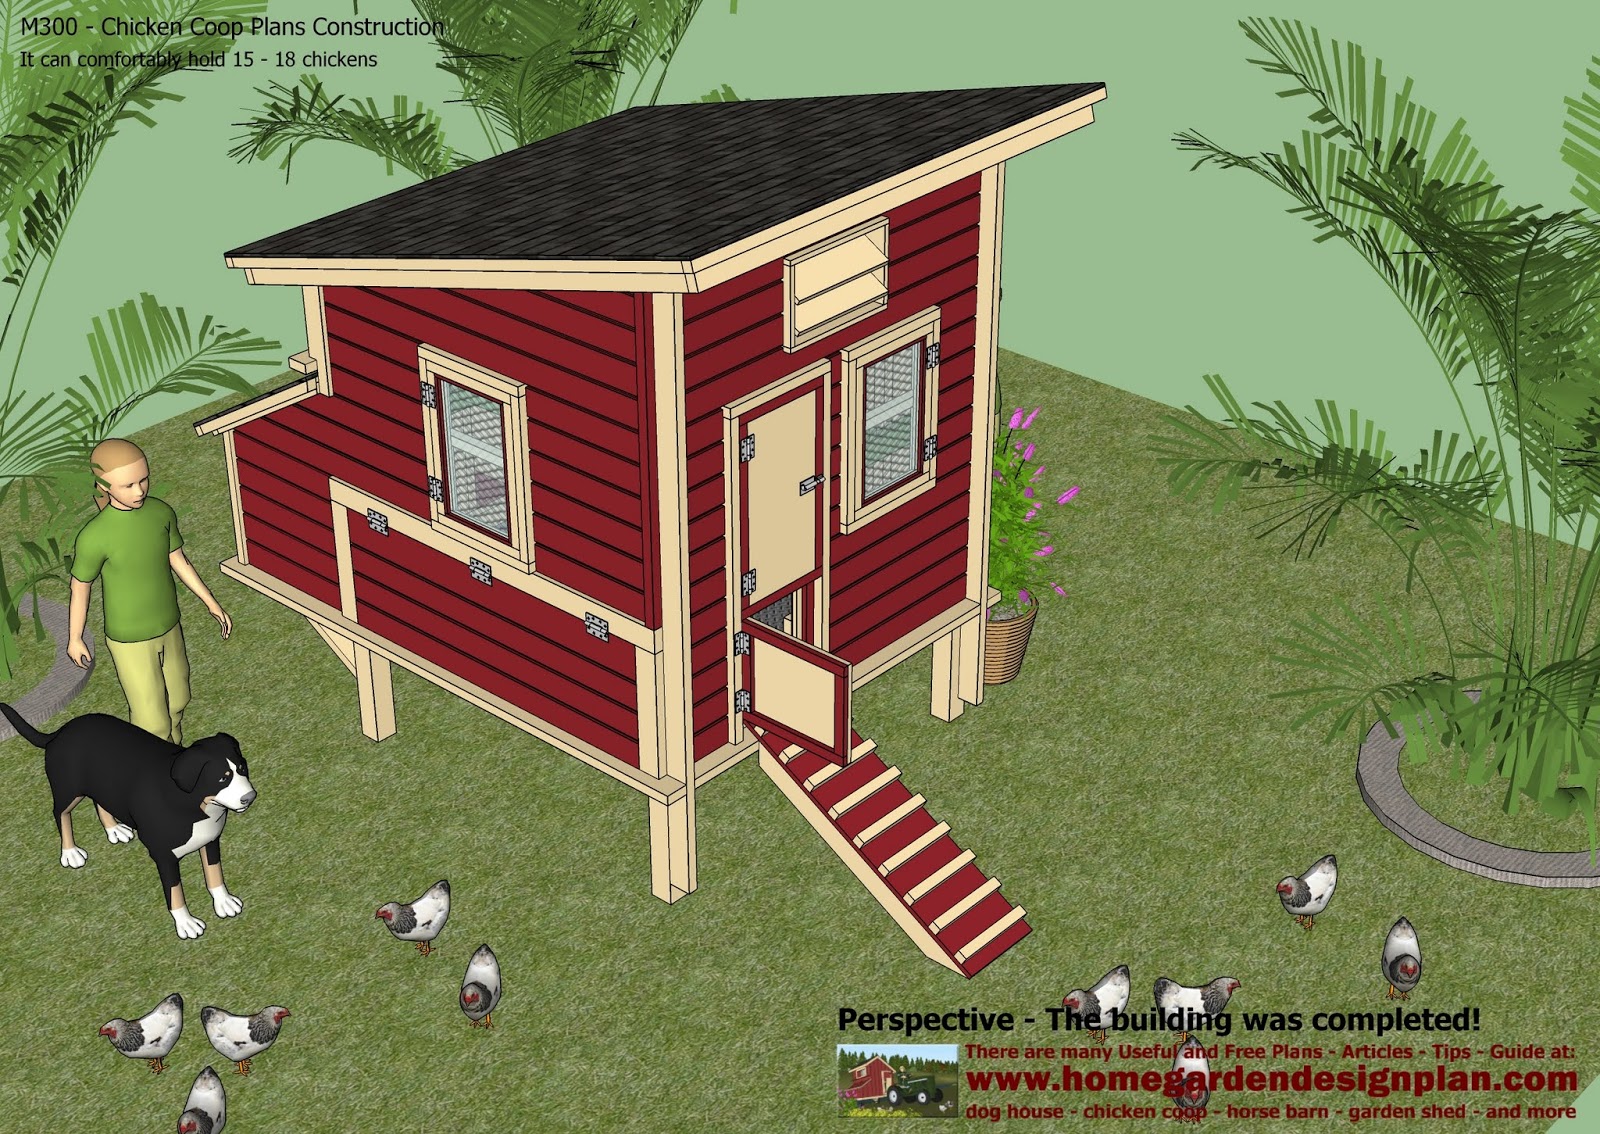 ... Chicken Coop Plans - Chicken Coop Design - How To Build A Chicken Coop